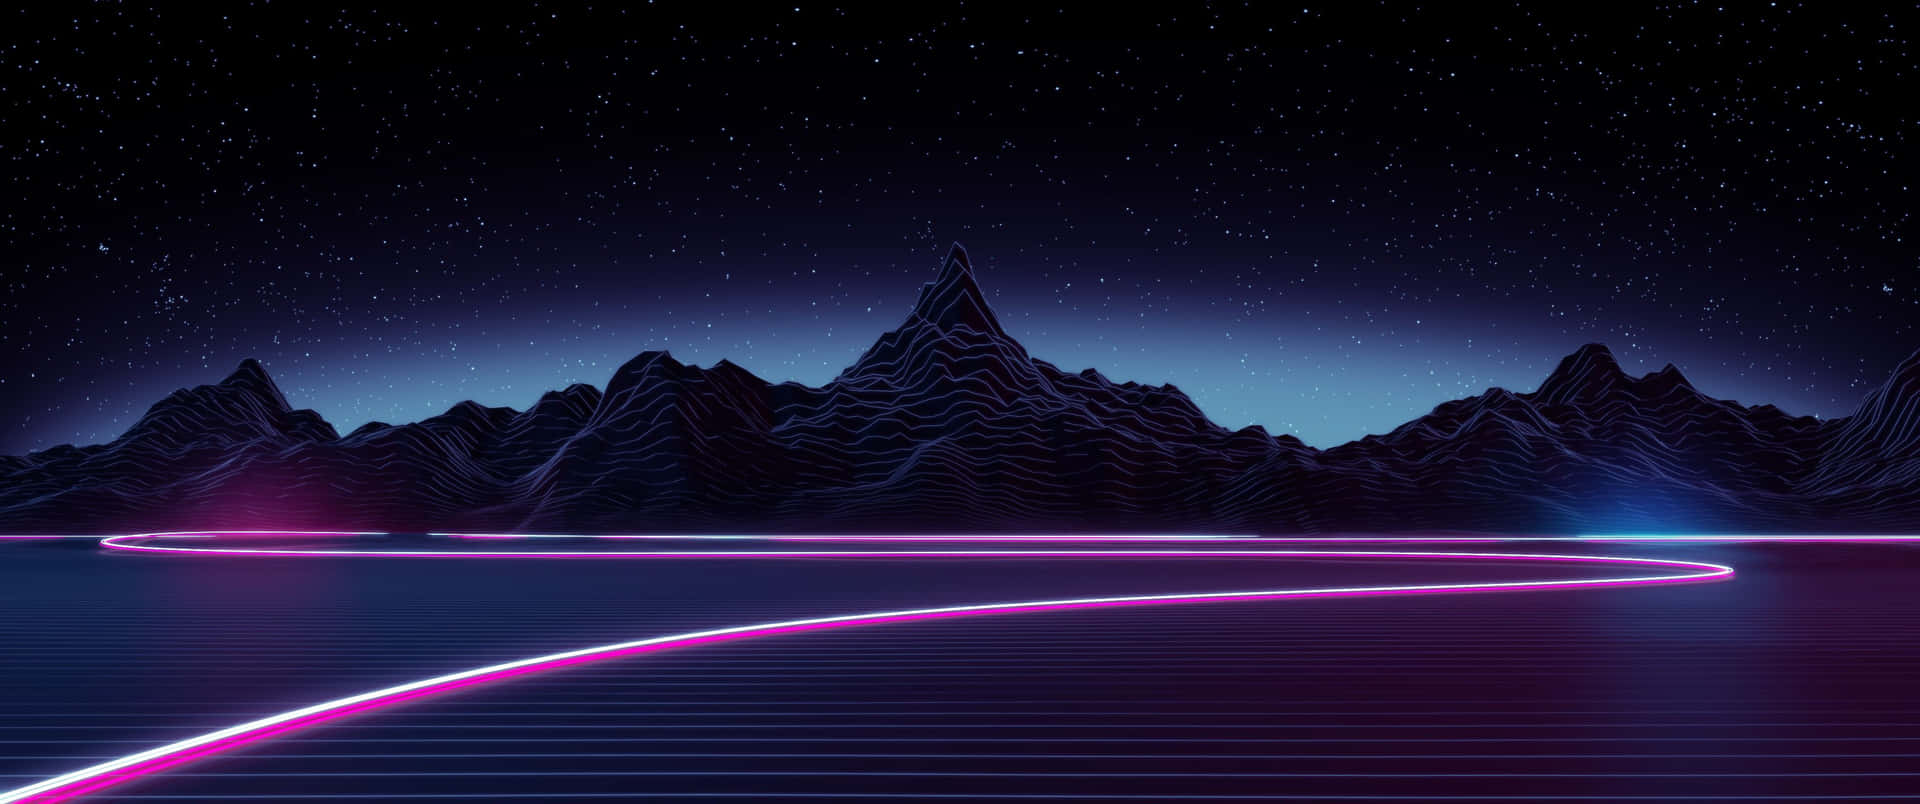 3440x1440pvaporwave Neon Mountain Bakgrundsbild.